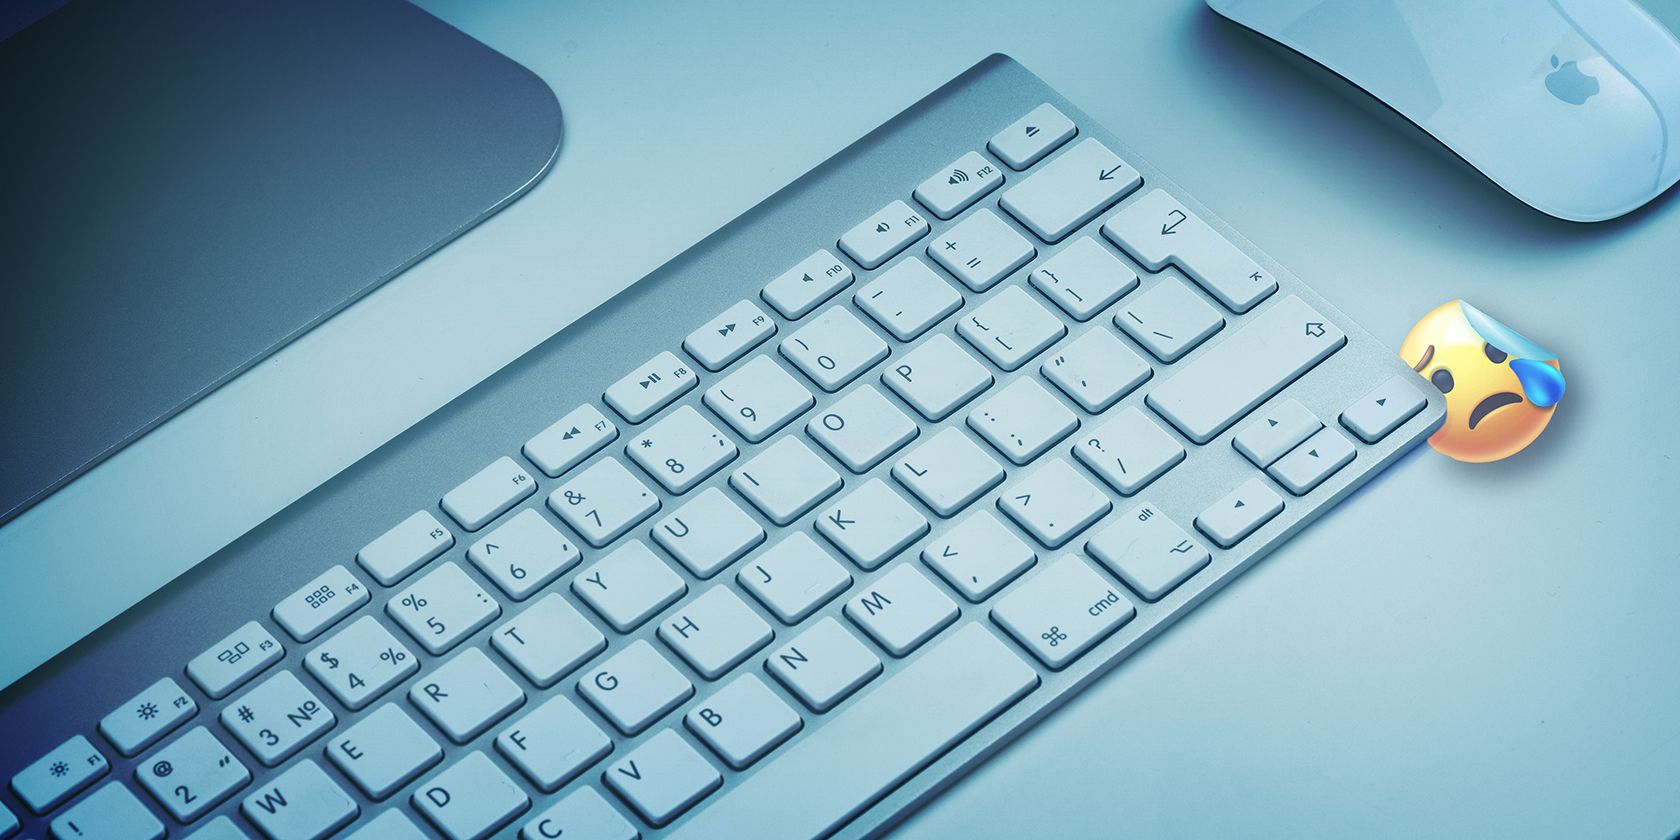 Magic Keyboard on a desk with crying emoji under it